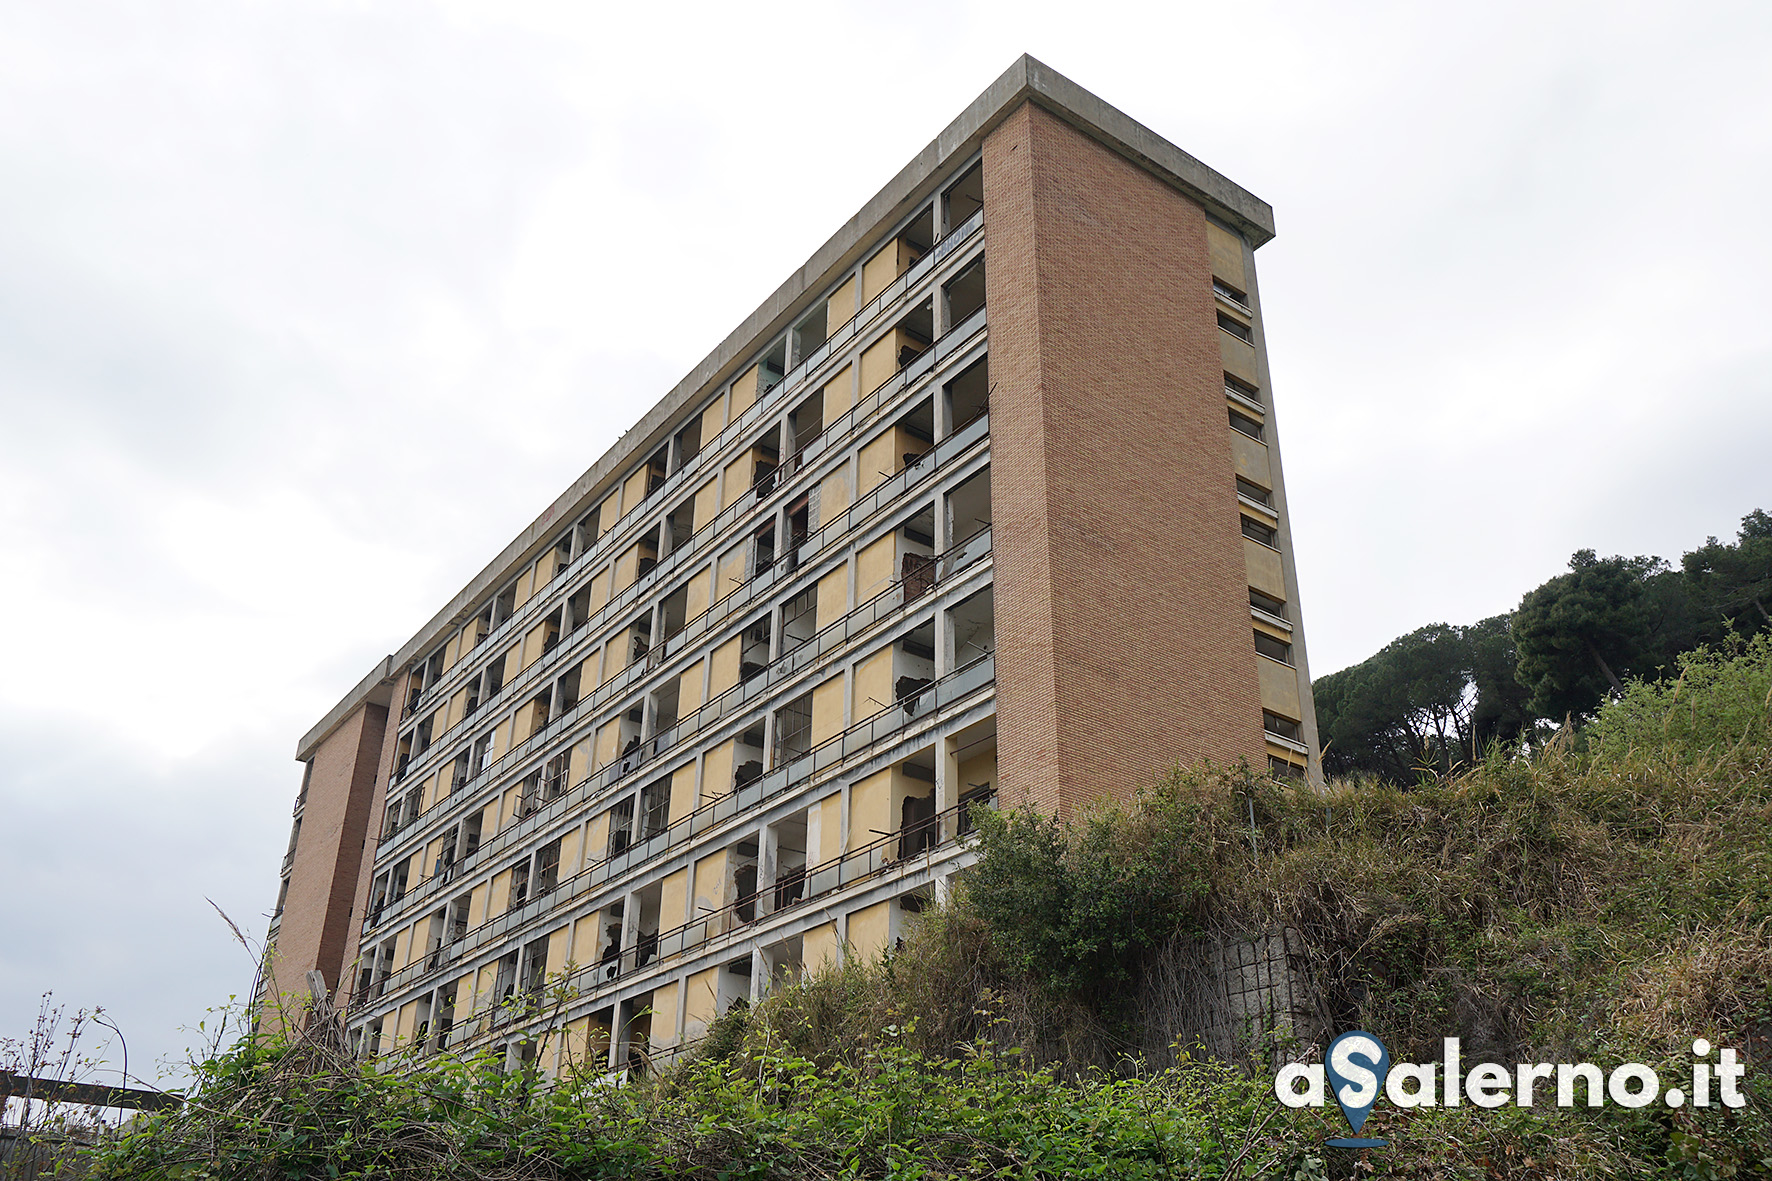 sal - 09 04 2019 Palazzo ex enpas foto Tanopress/Francesco Pecoraro